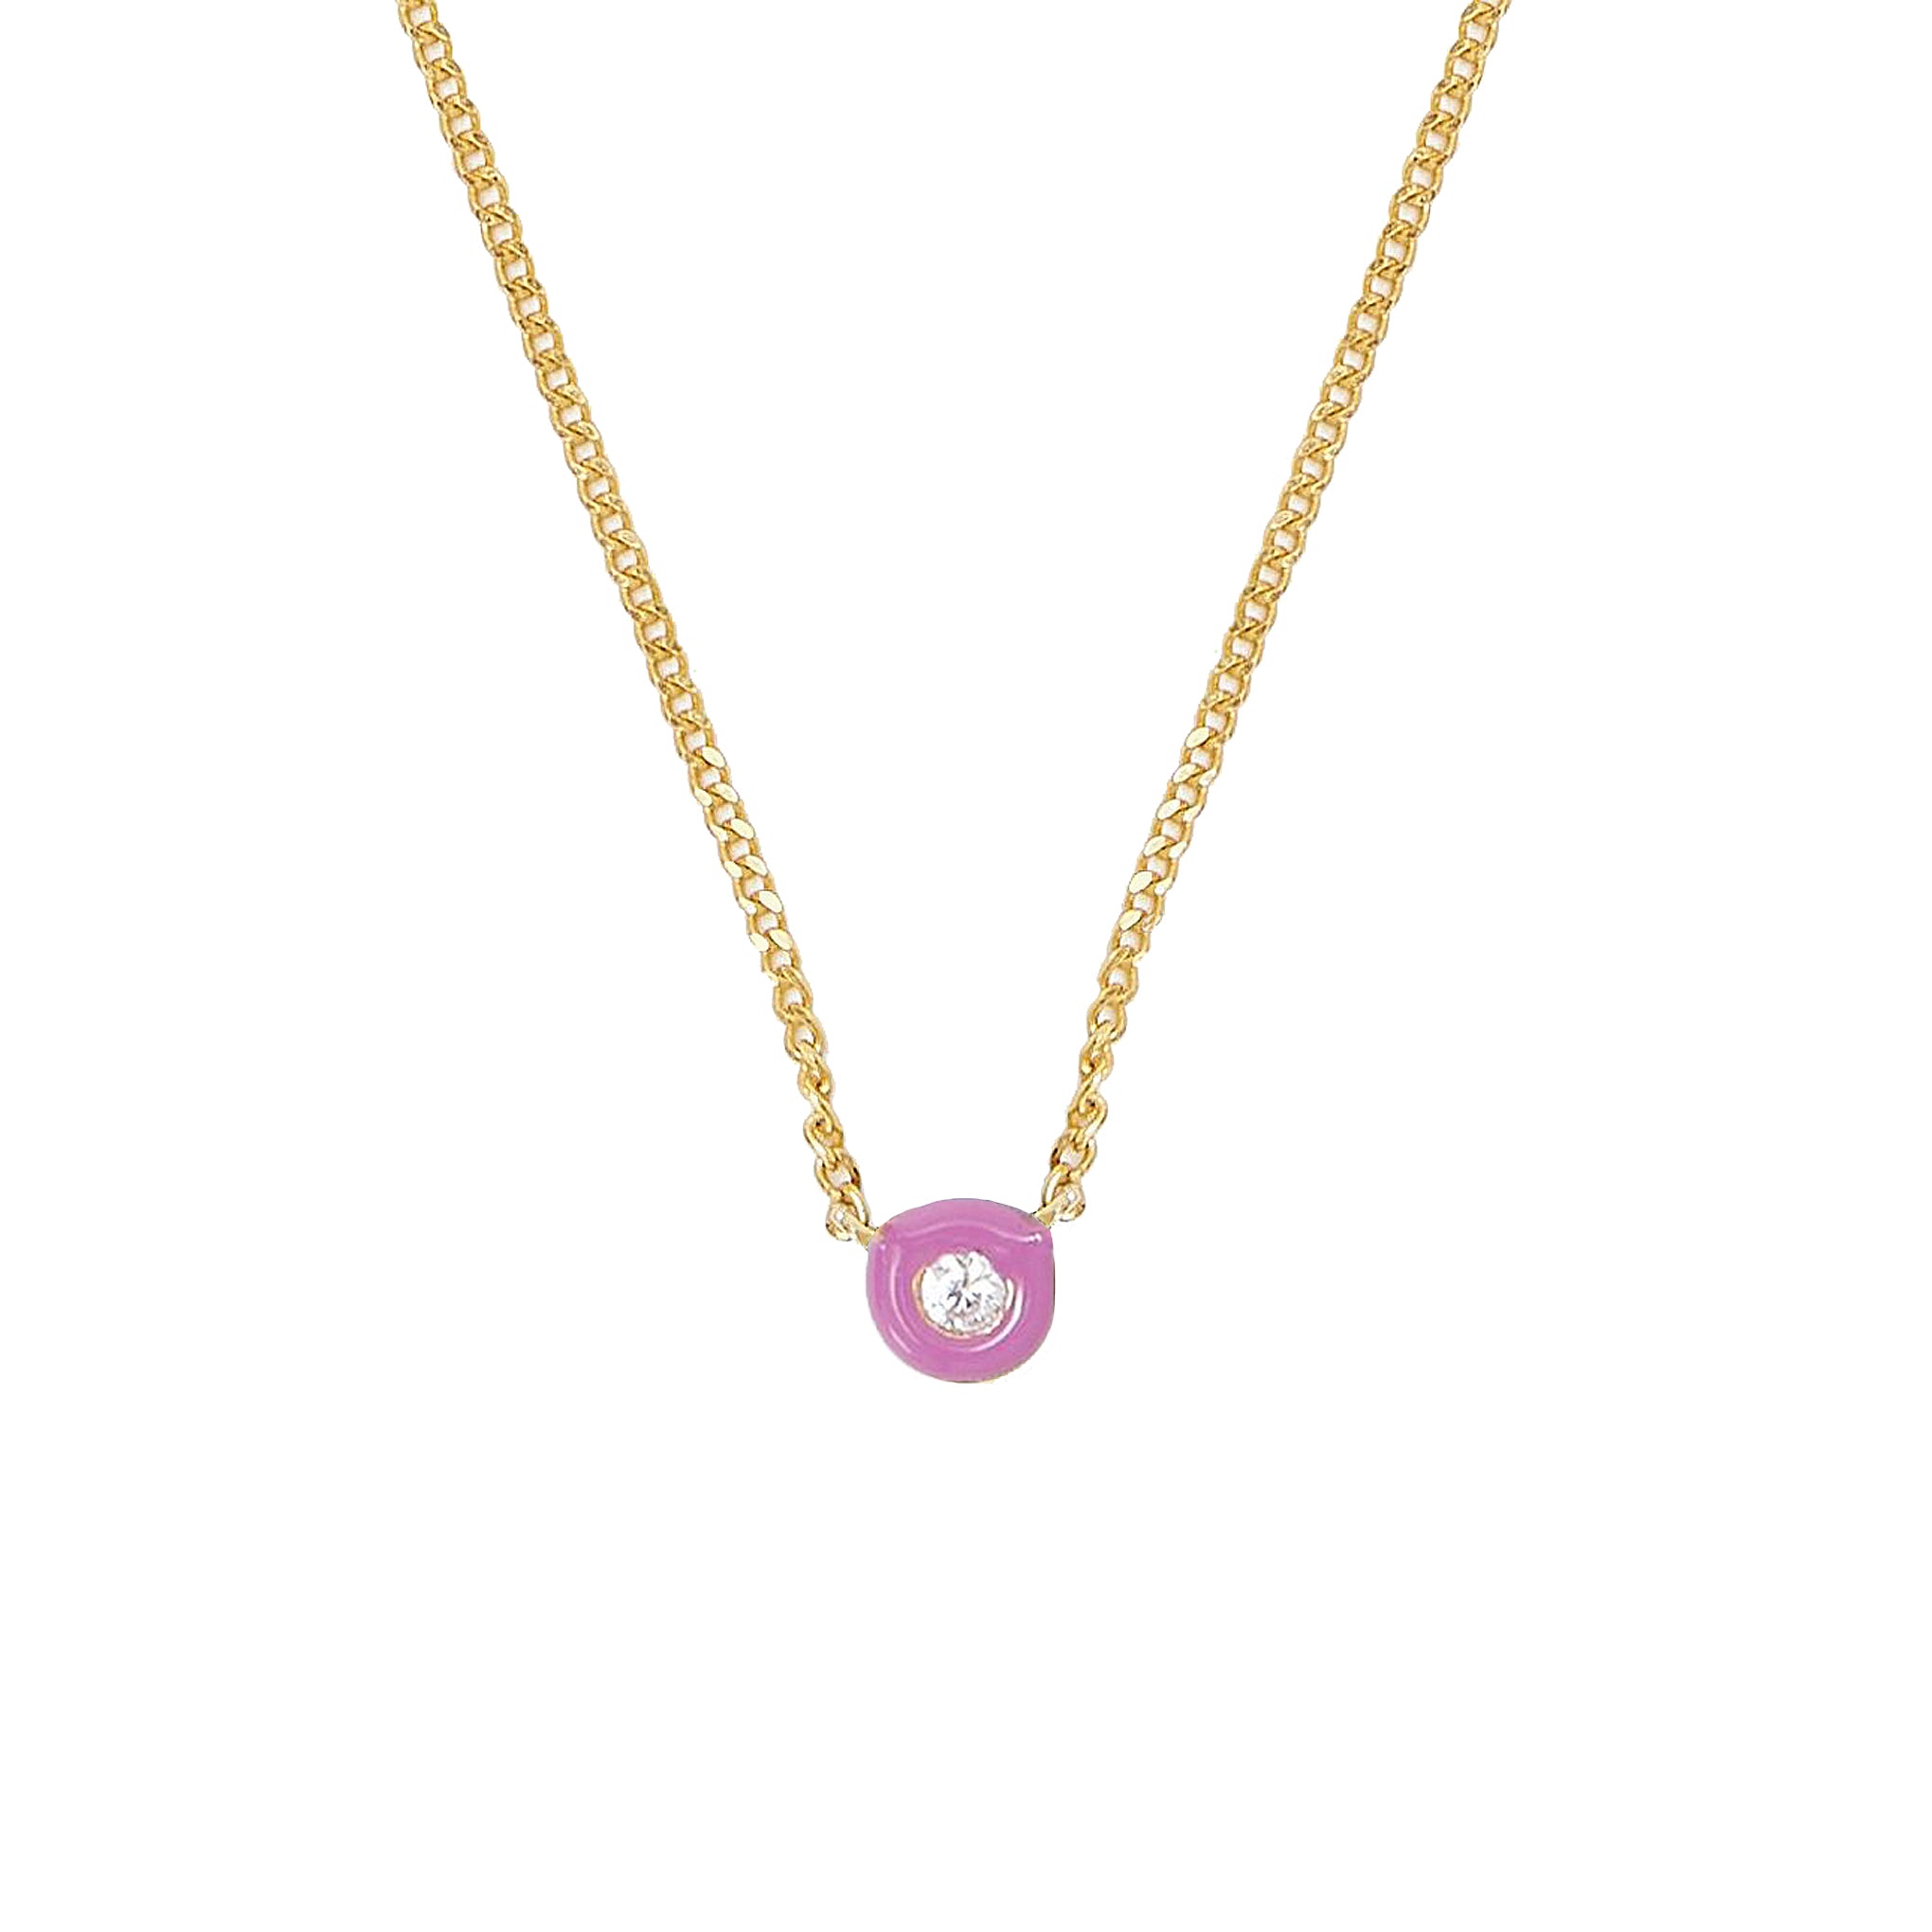 Chan Luu Bezel Set Diamond Pendant Necklace in Violet Enamel and Gold Vermeil